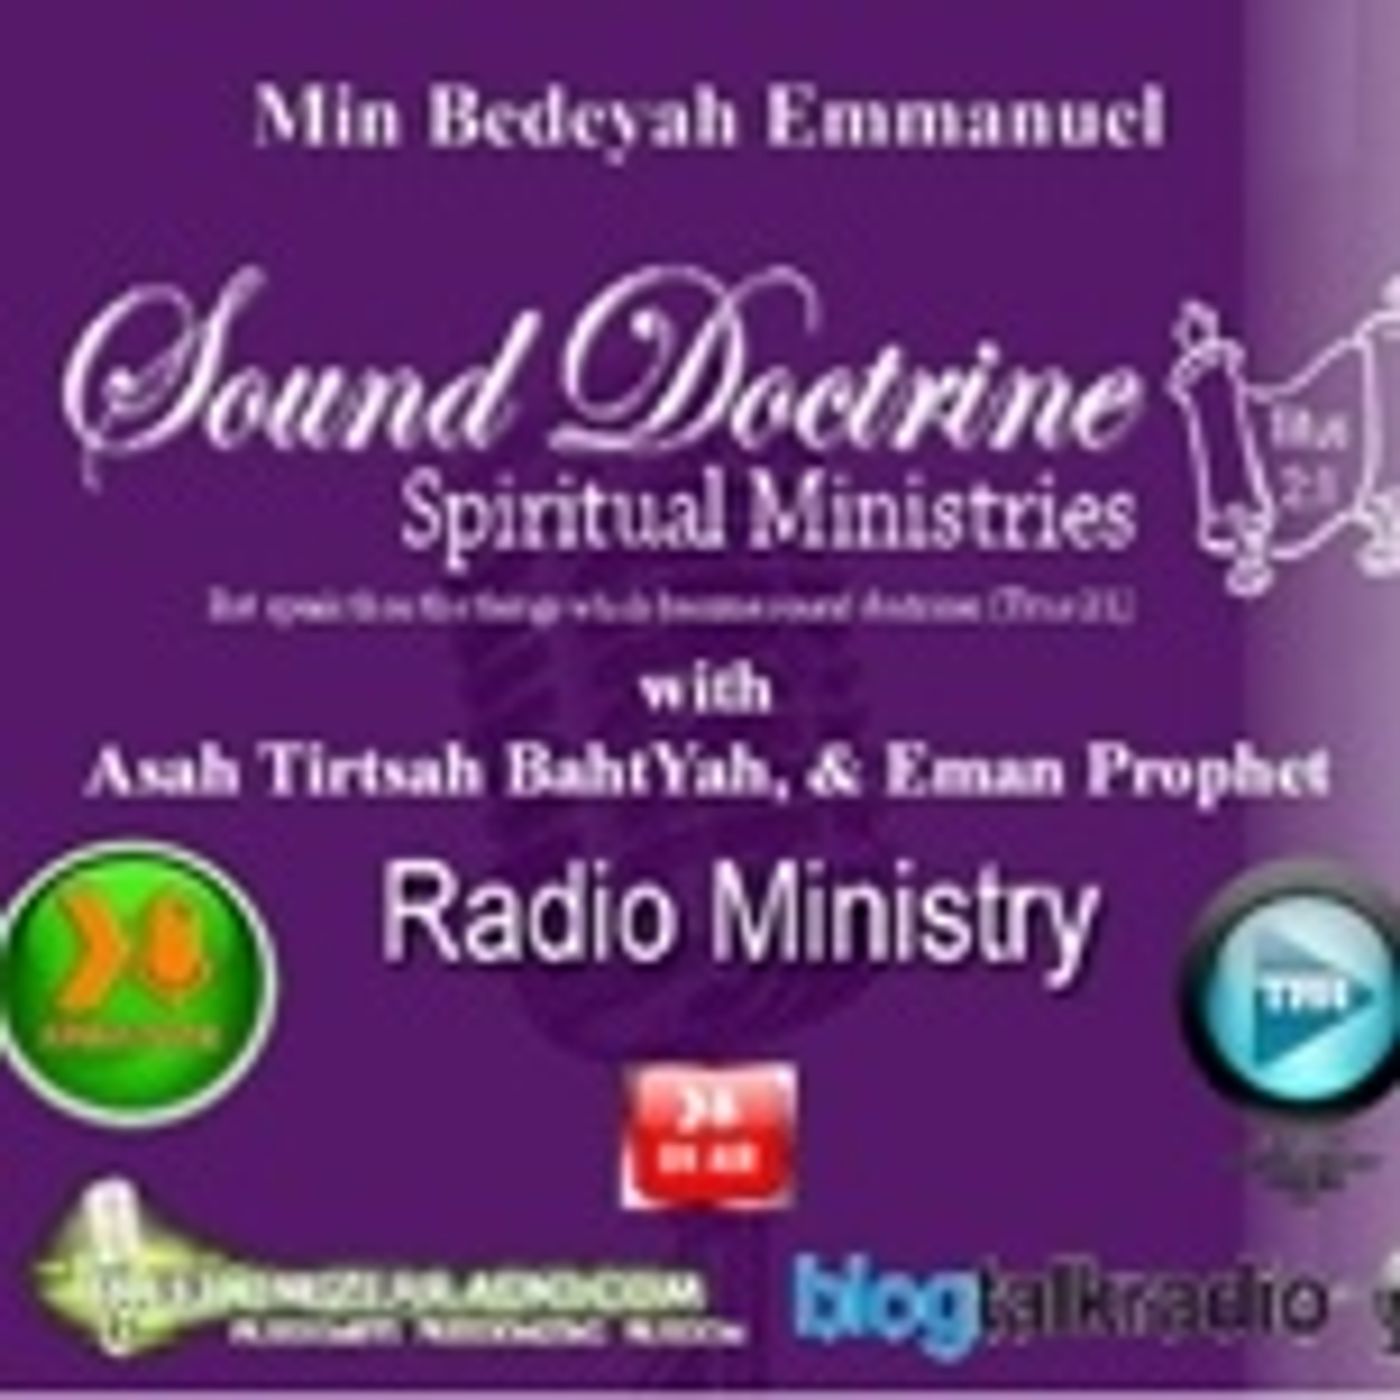 Sound Doctrine Spiritual Ministries